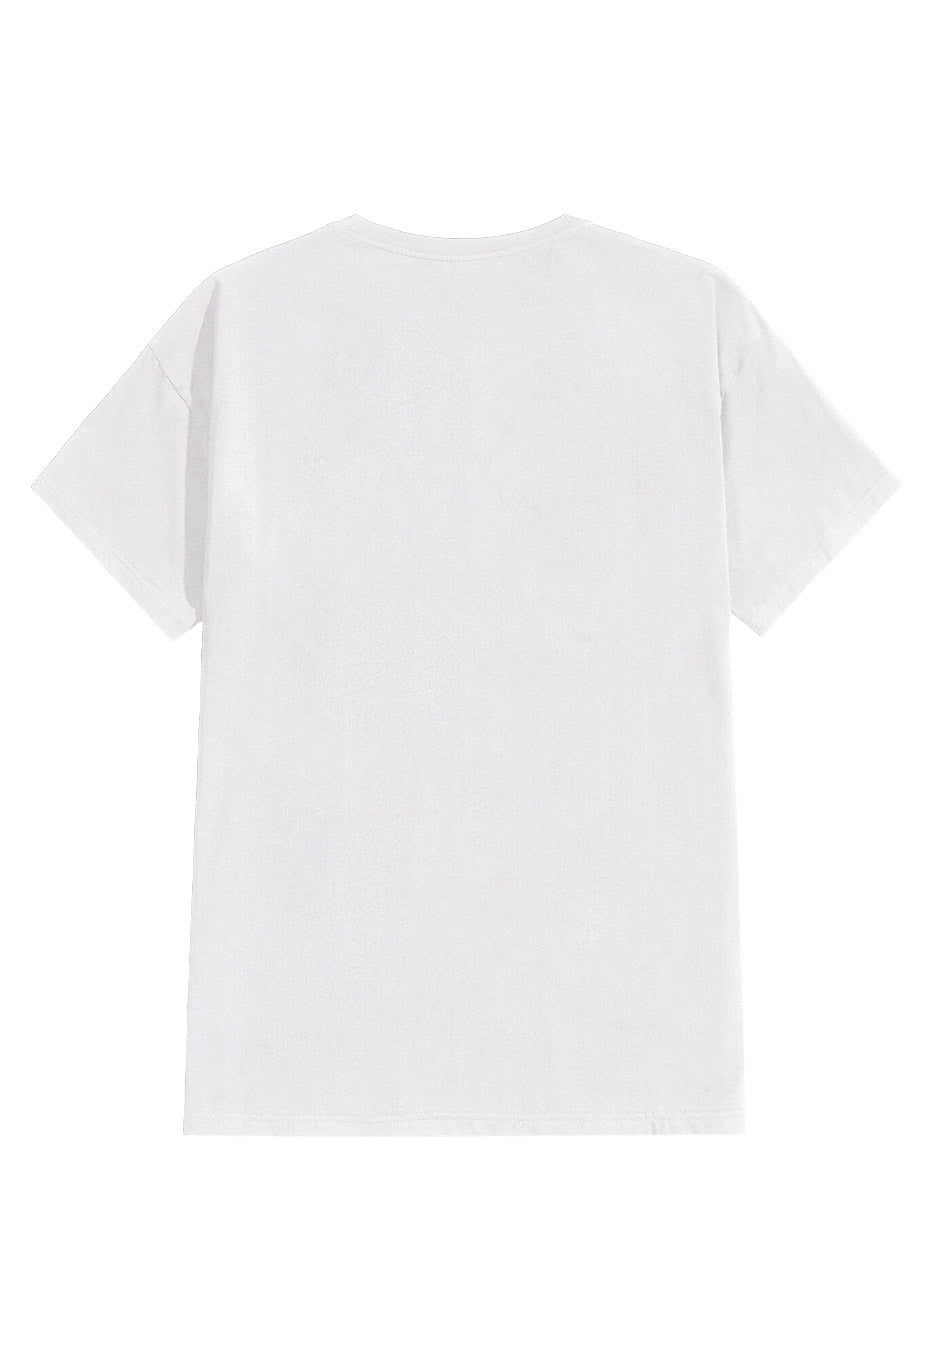 Heaven Shall Burn - Chameleon White - T-Shirt | Neutral-Image